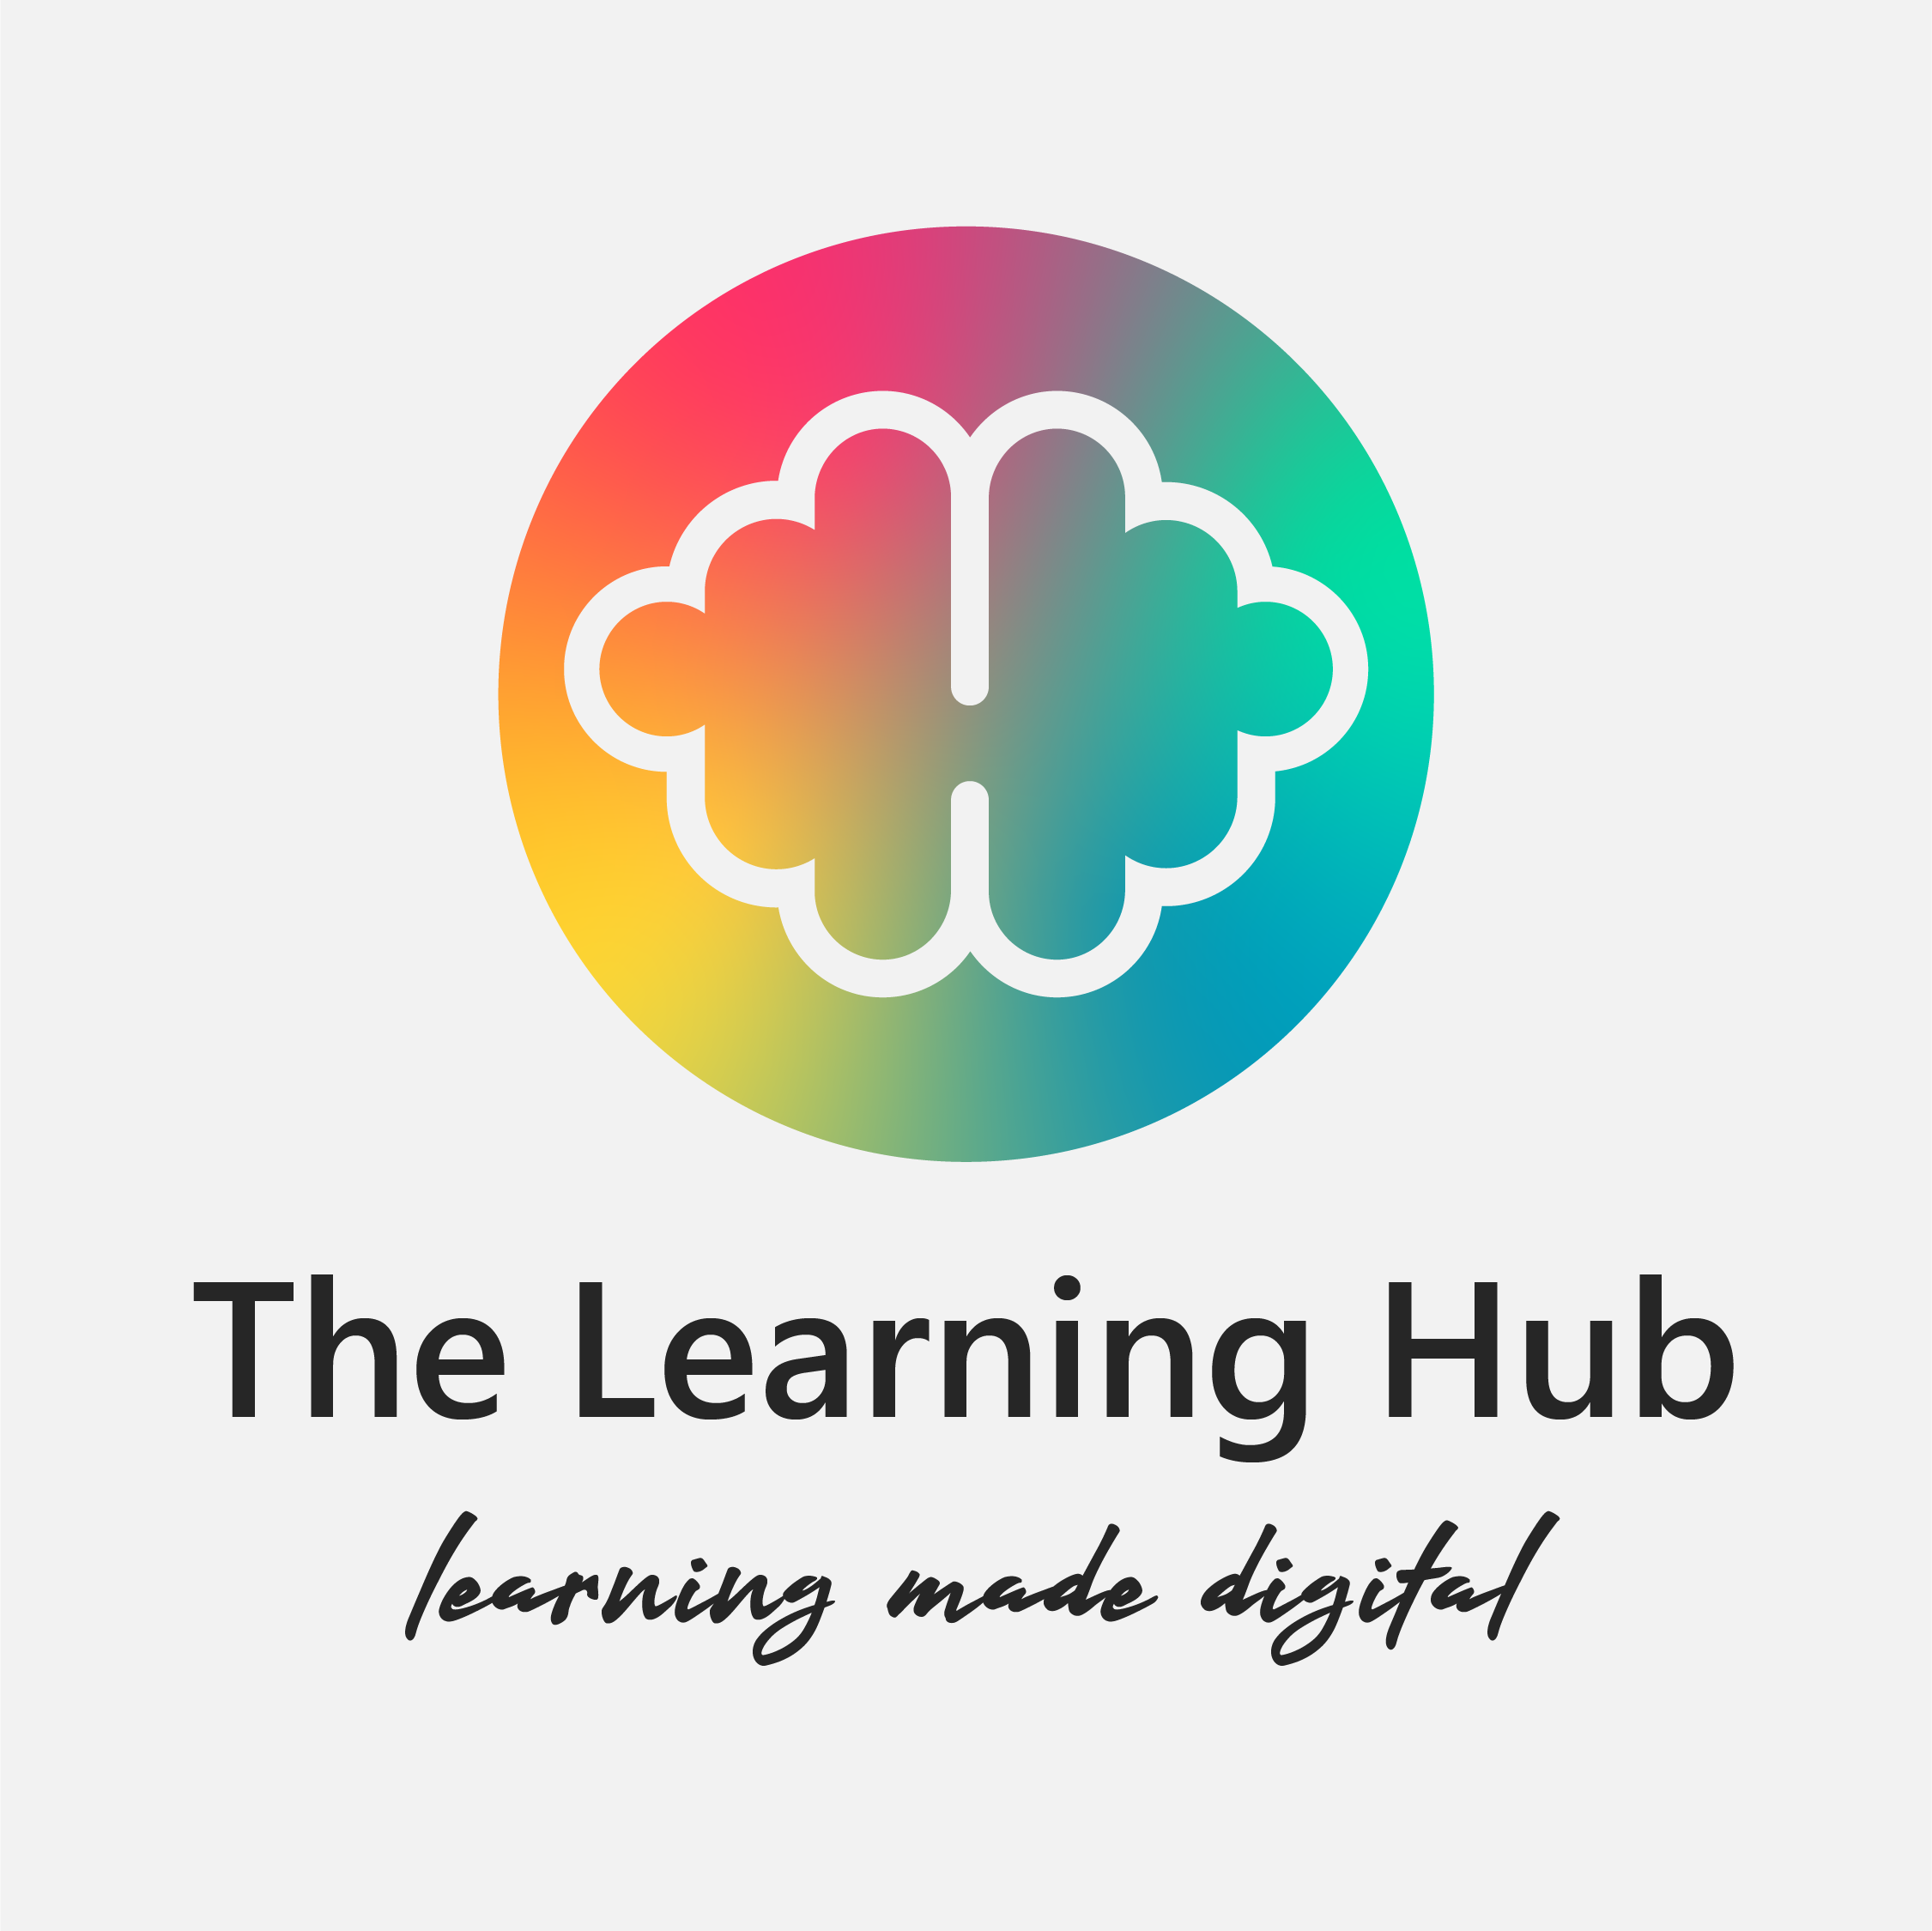 Meet The Learning Hub 2.0